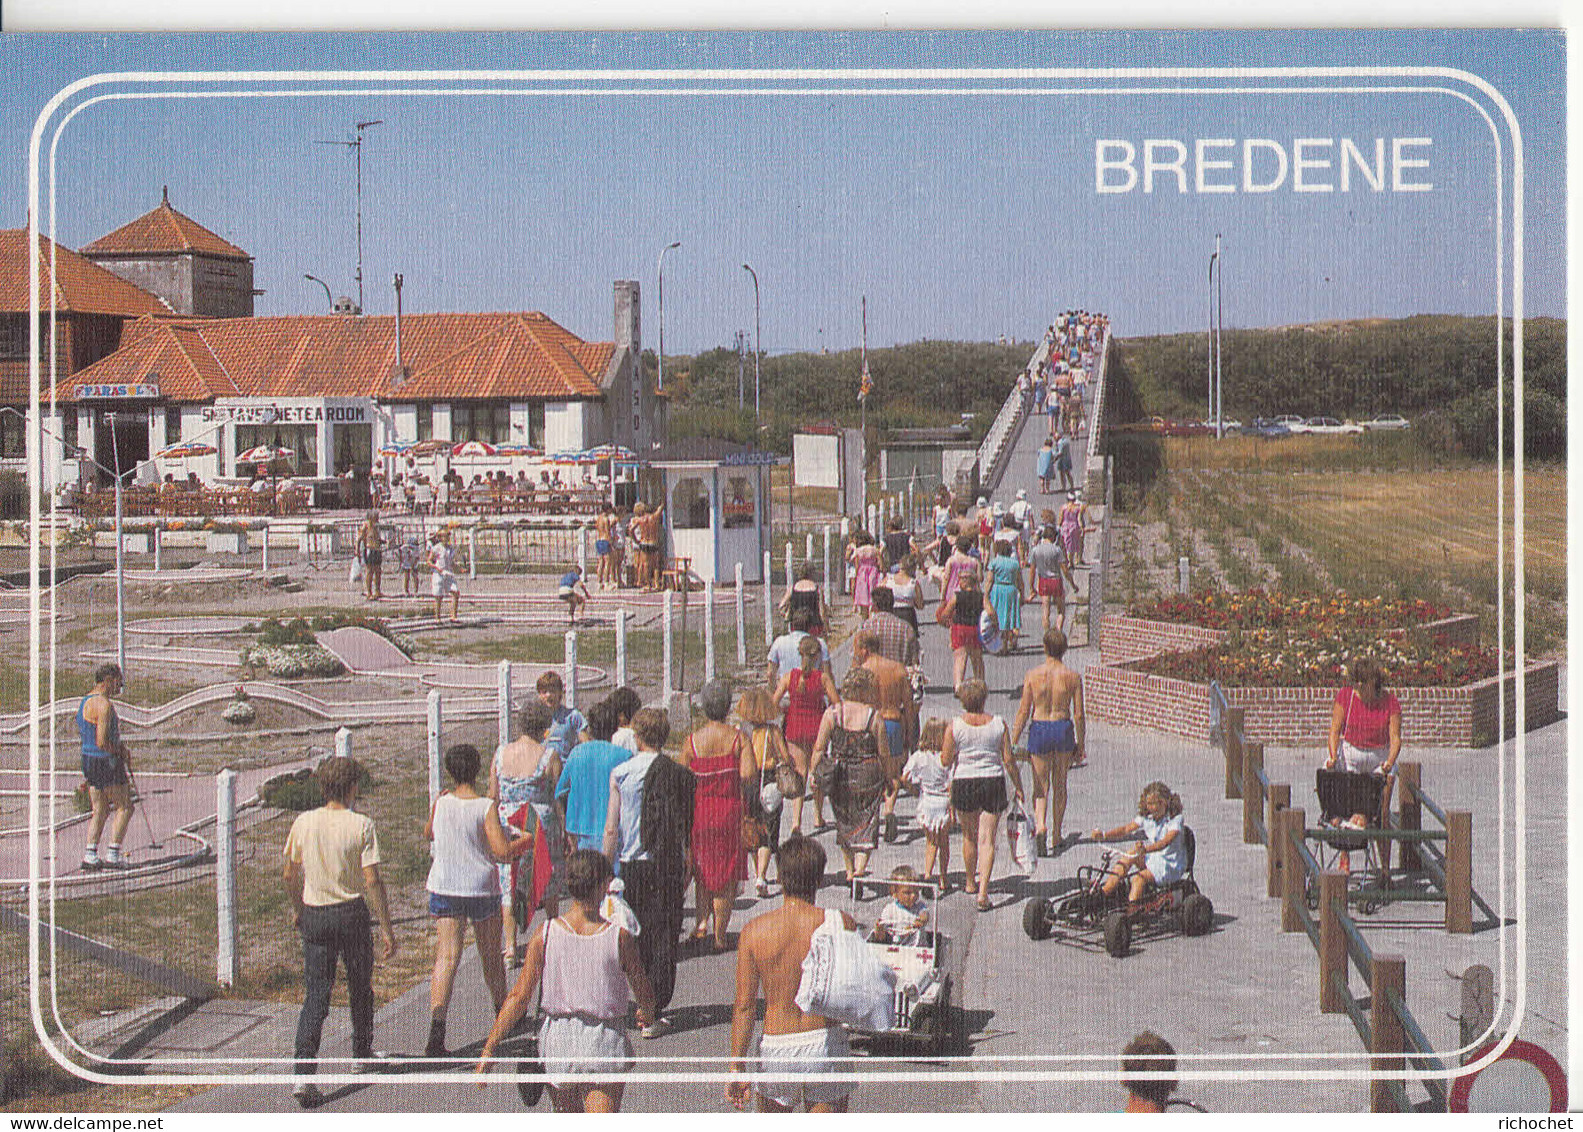 BREDENE - Miniatuurgolf - Wandelbrug Naar Het Strand - Golf Miniature - Promenade Du Pont Vers La Plage - Bredene